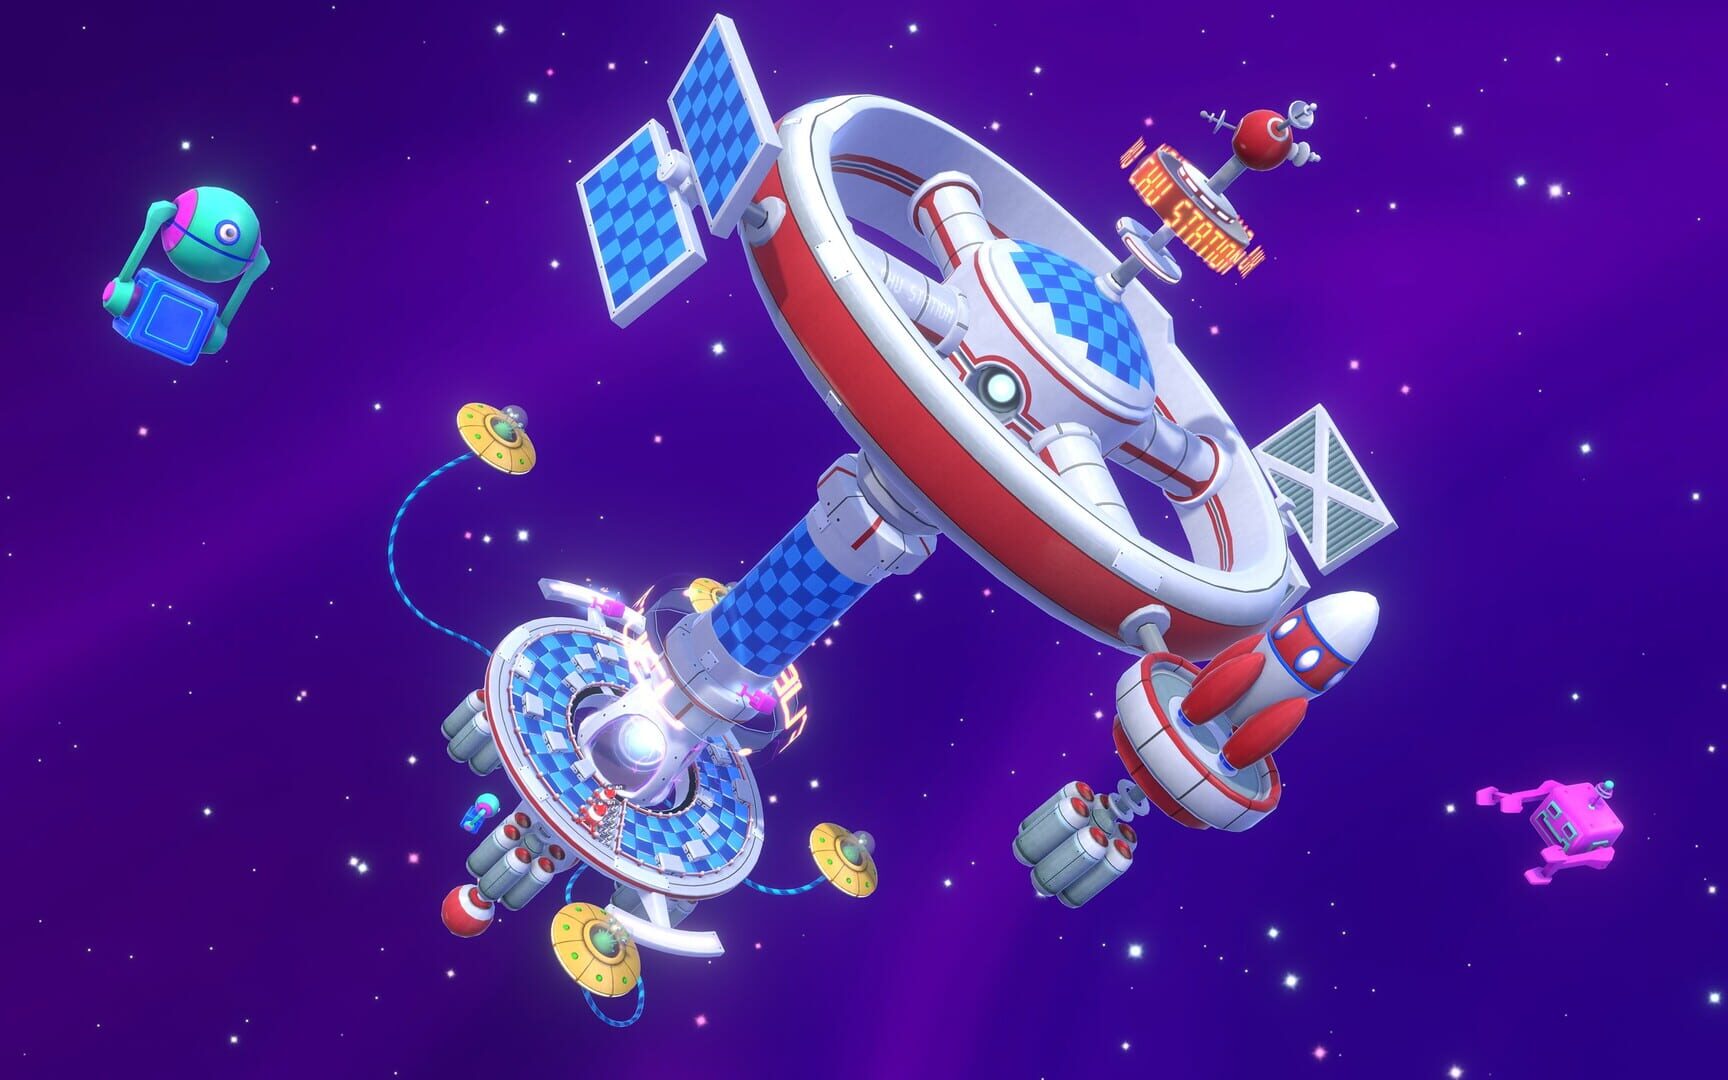 ChuChu Rocket! Universe screenshots